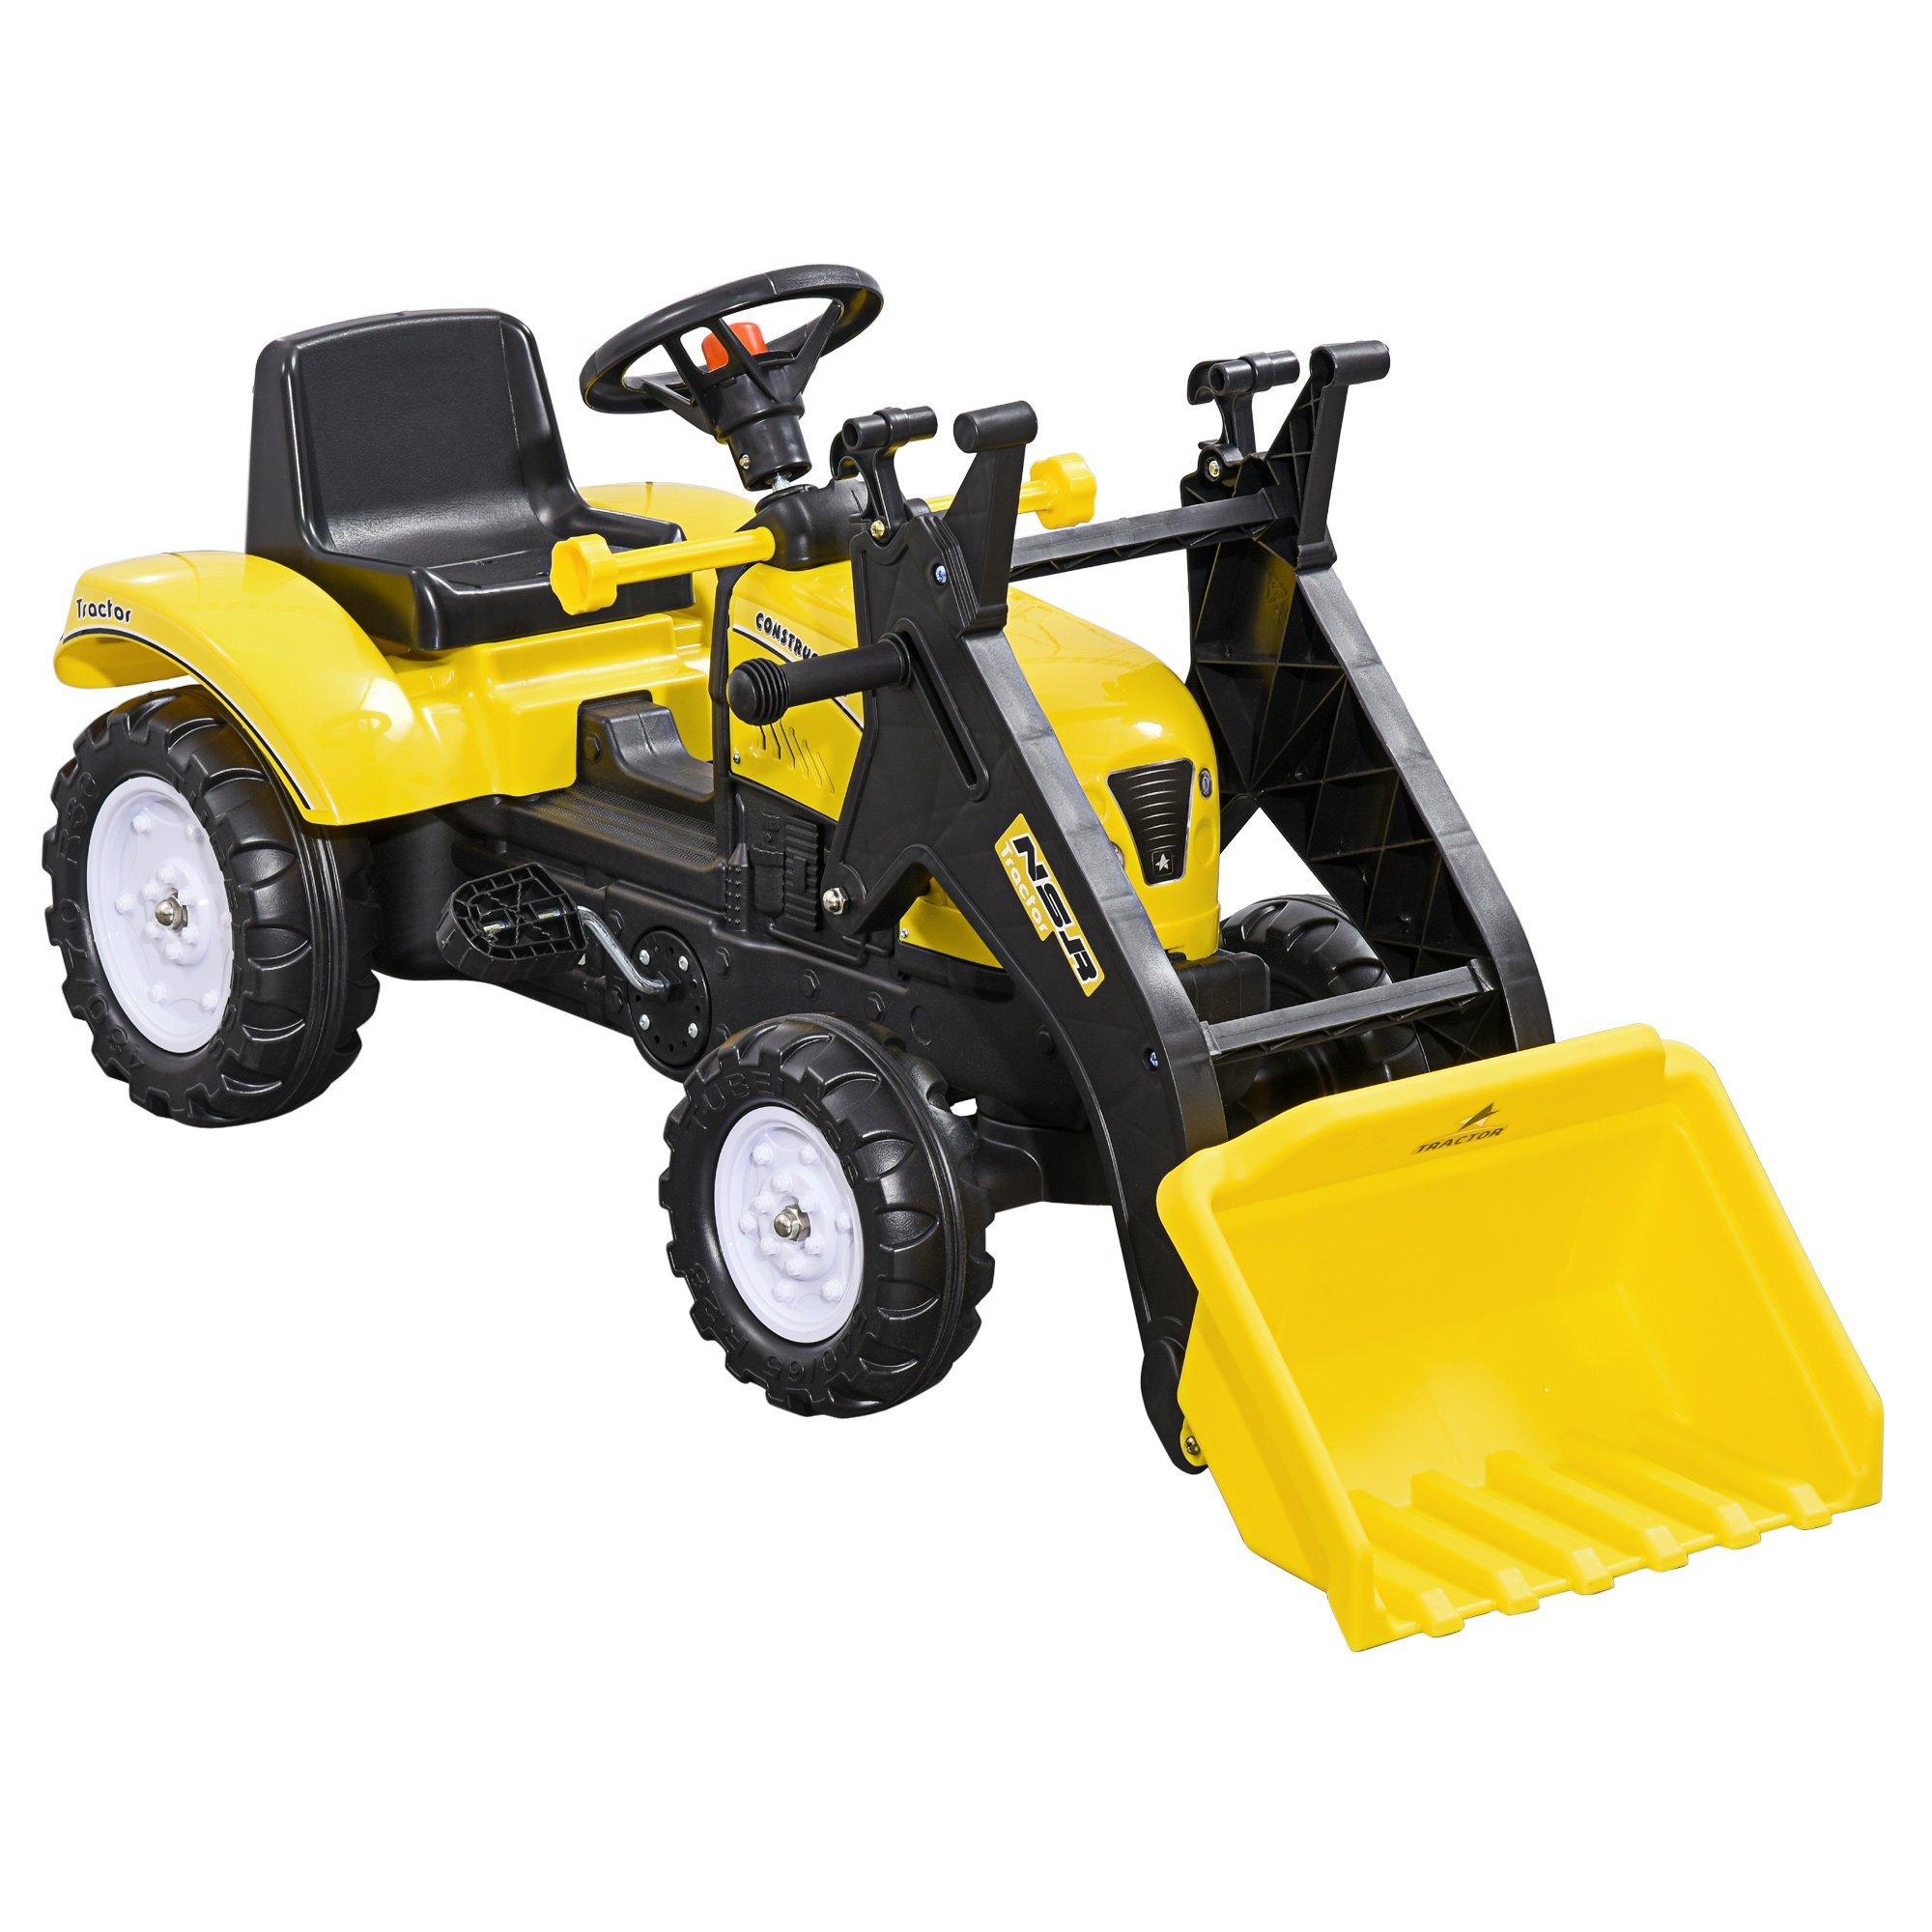 Pedal Go Kart Ride On Excavator W/ Front Loader Digger,Four Wheels Child Toy